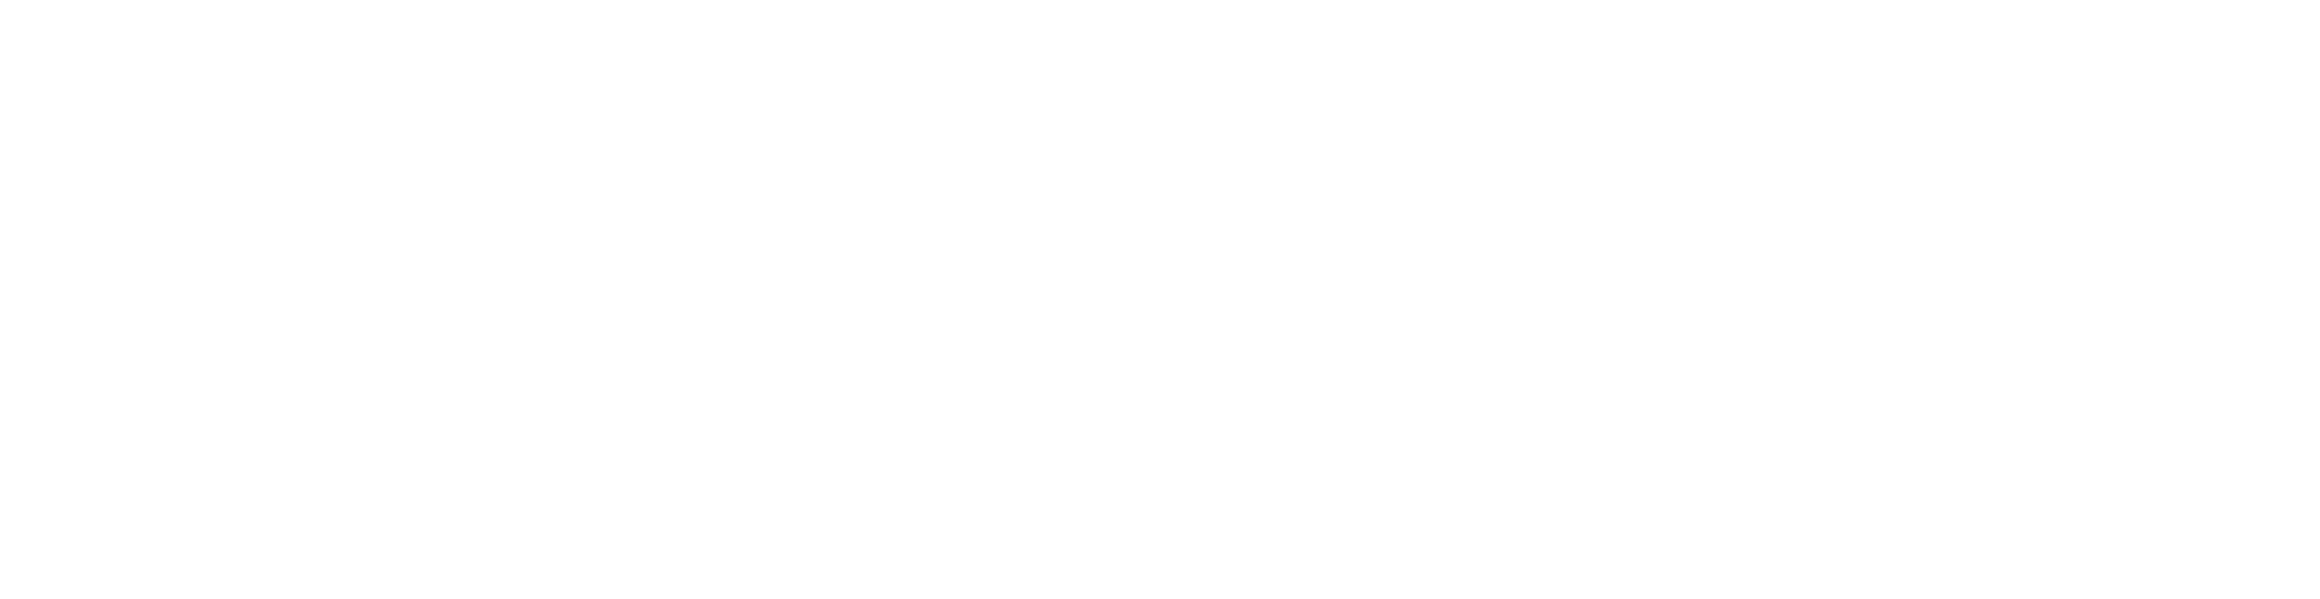 flyfishfinder logo